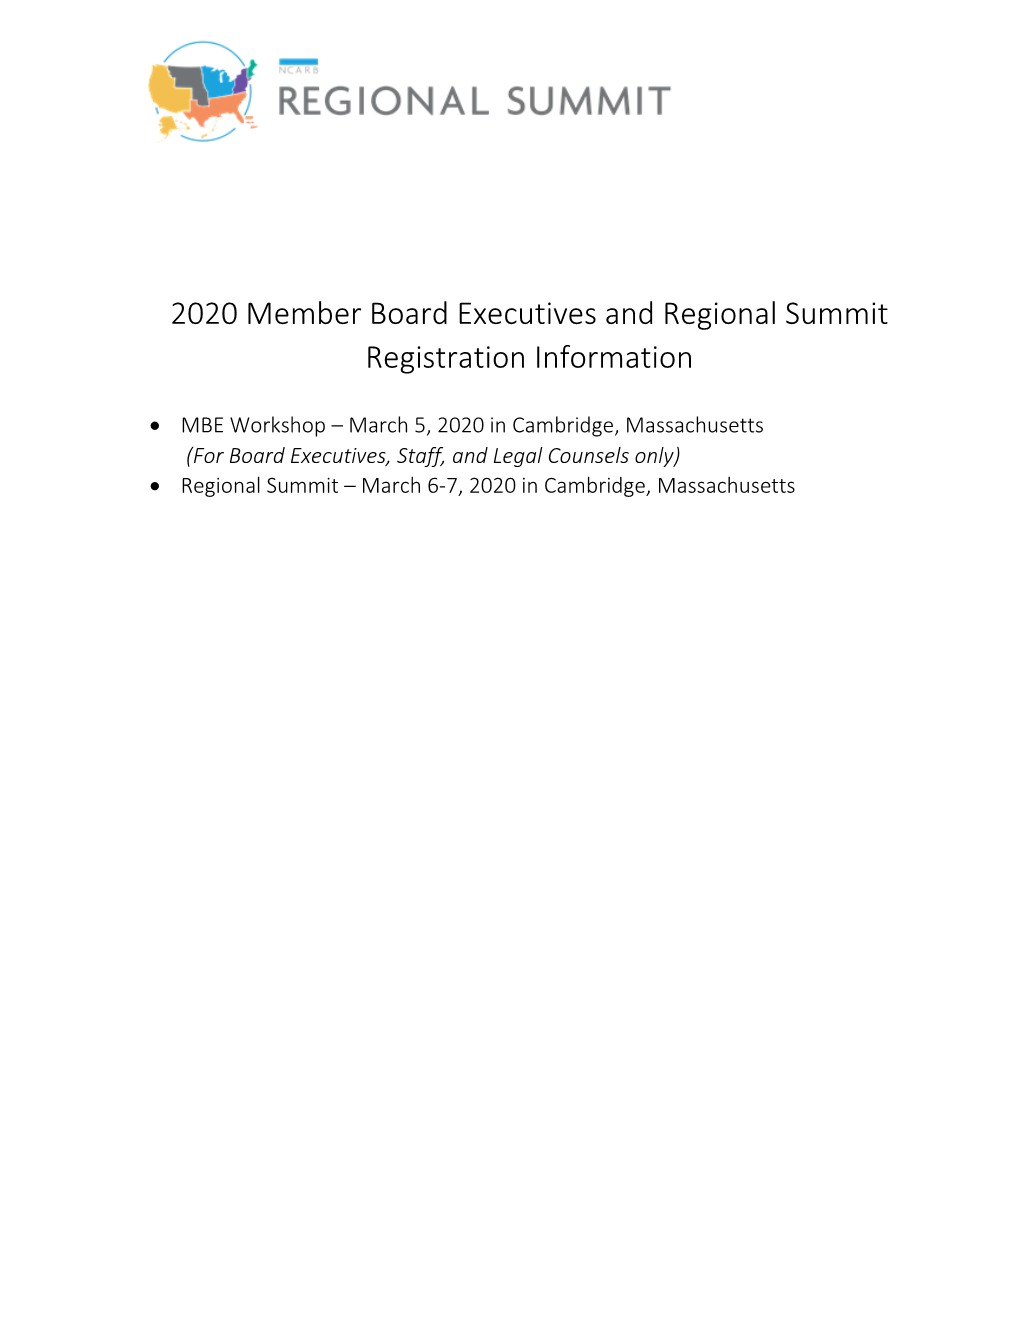 2020 Member Board Executives and Regional Summit Registration Information